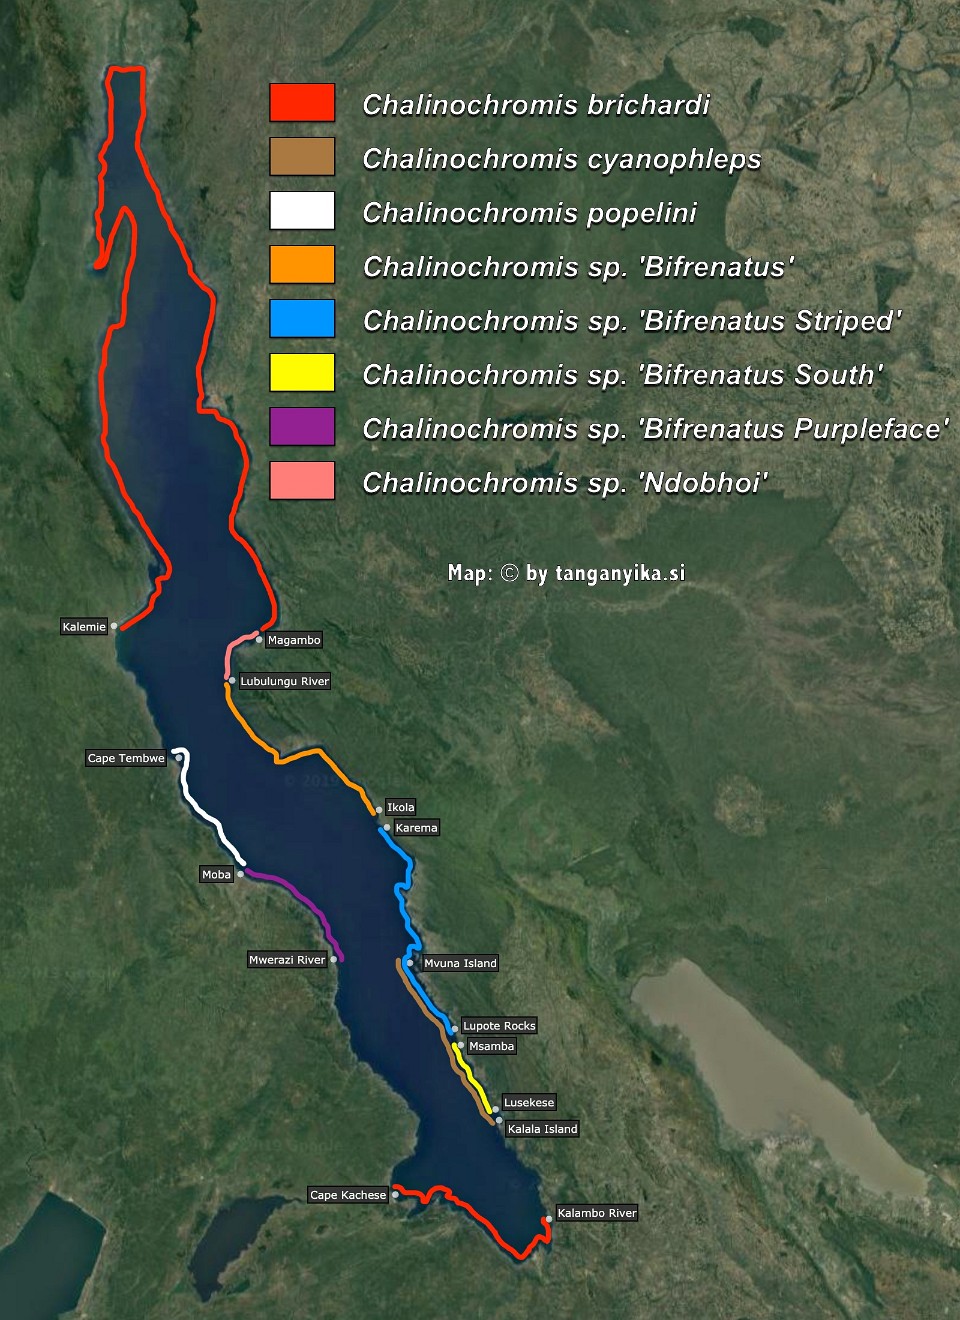 Chalinochromis distribution map by tanganyika.si